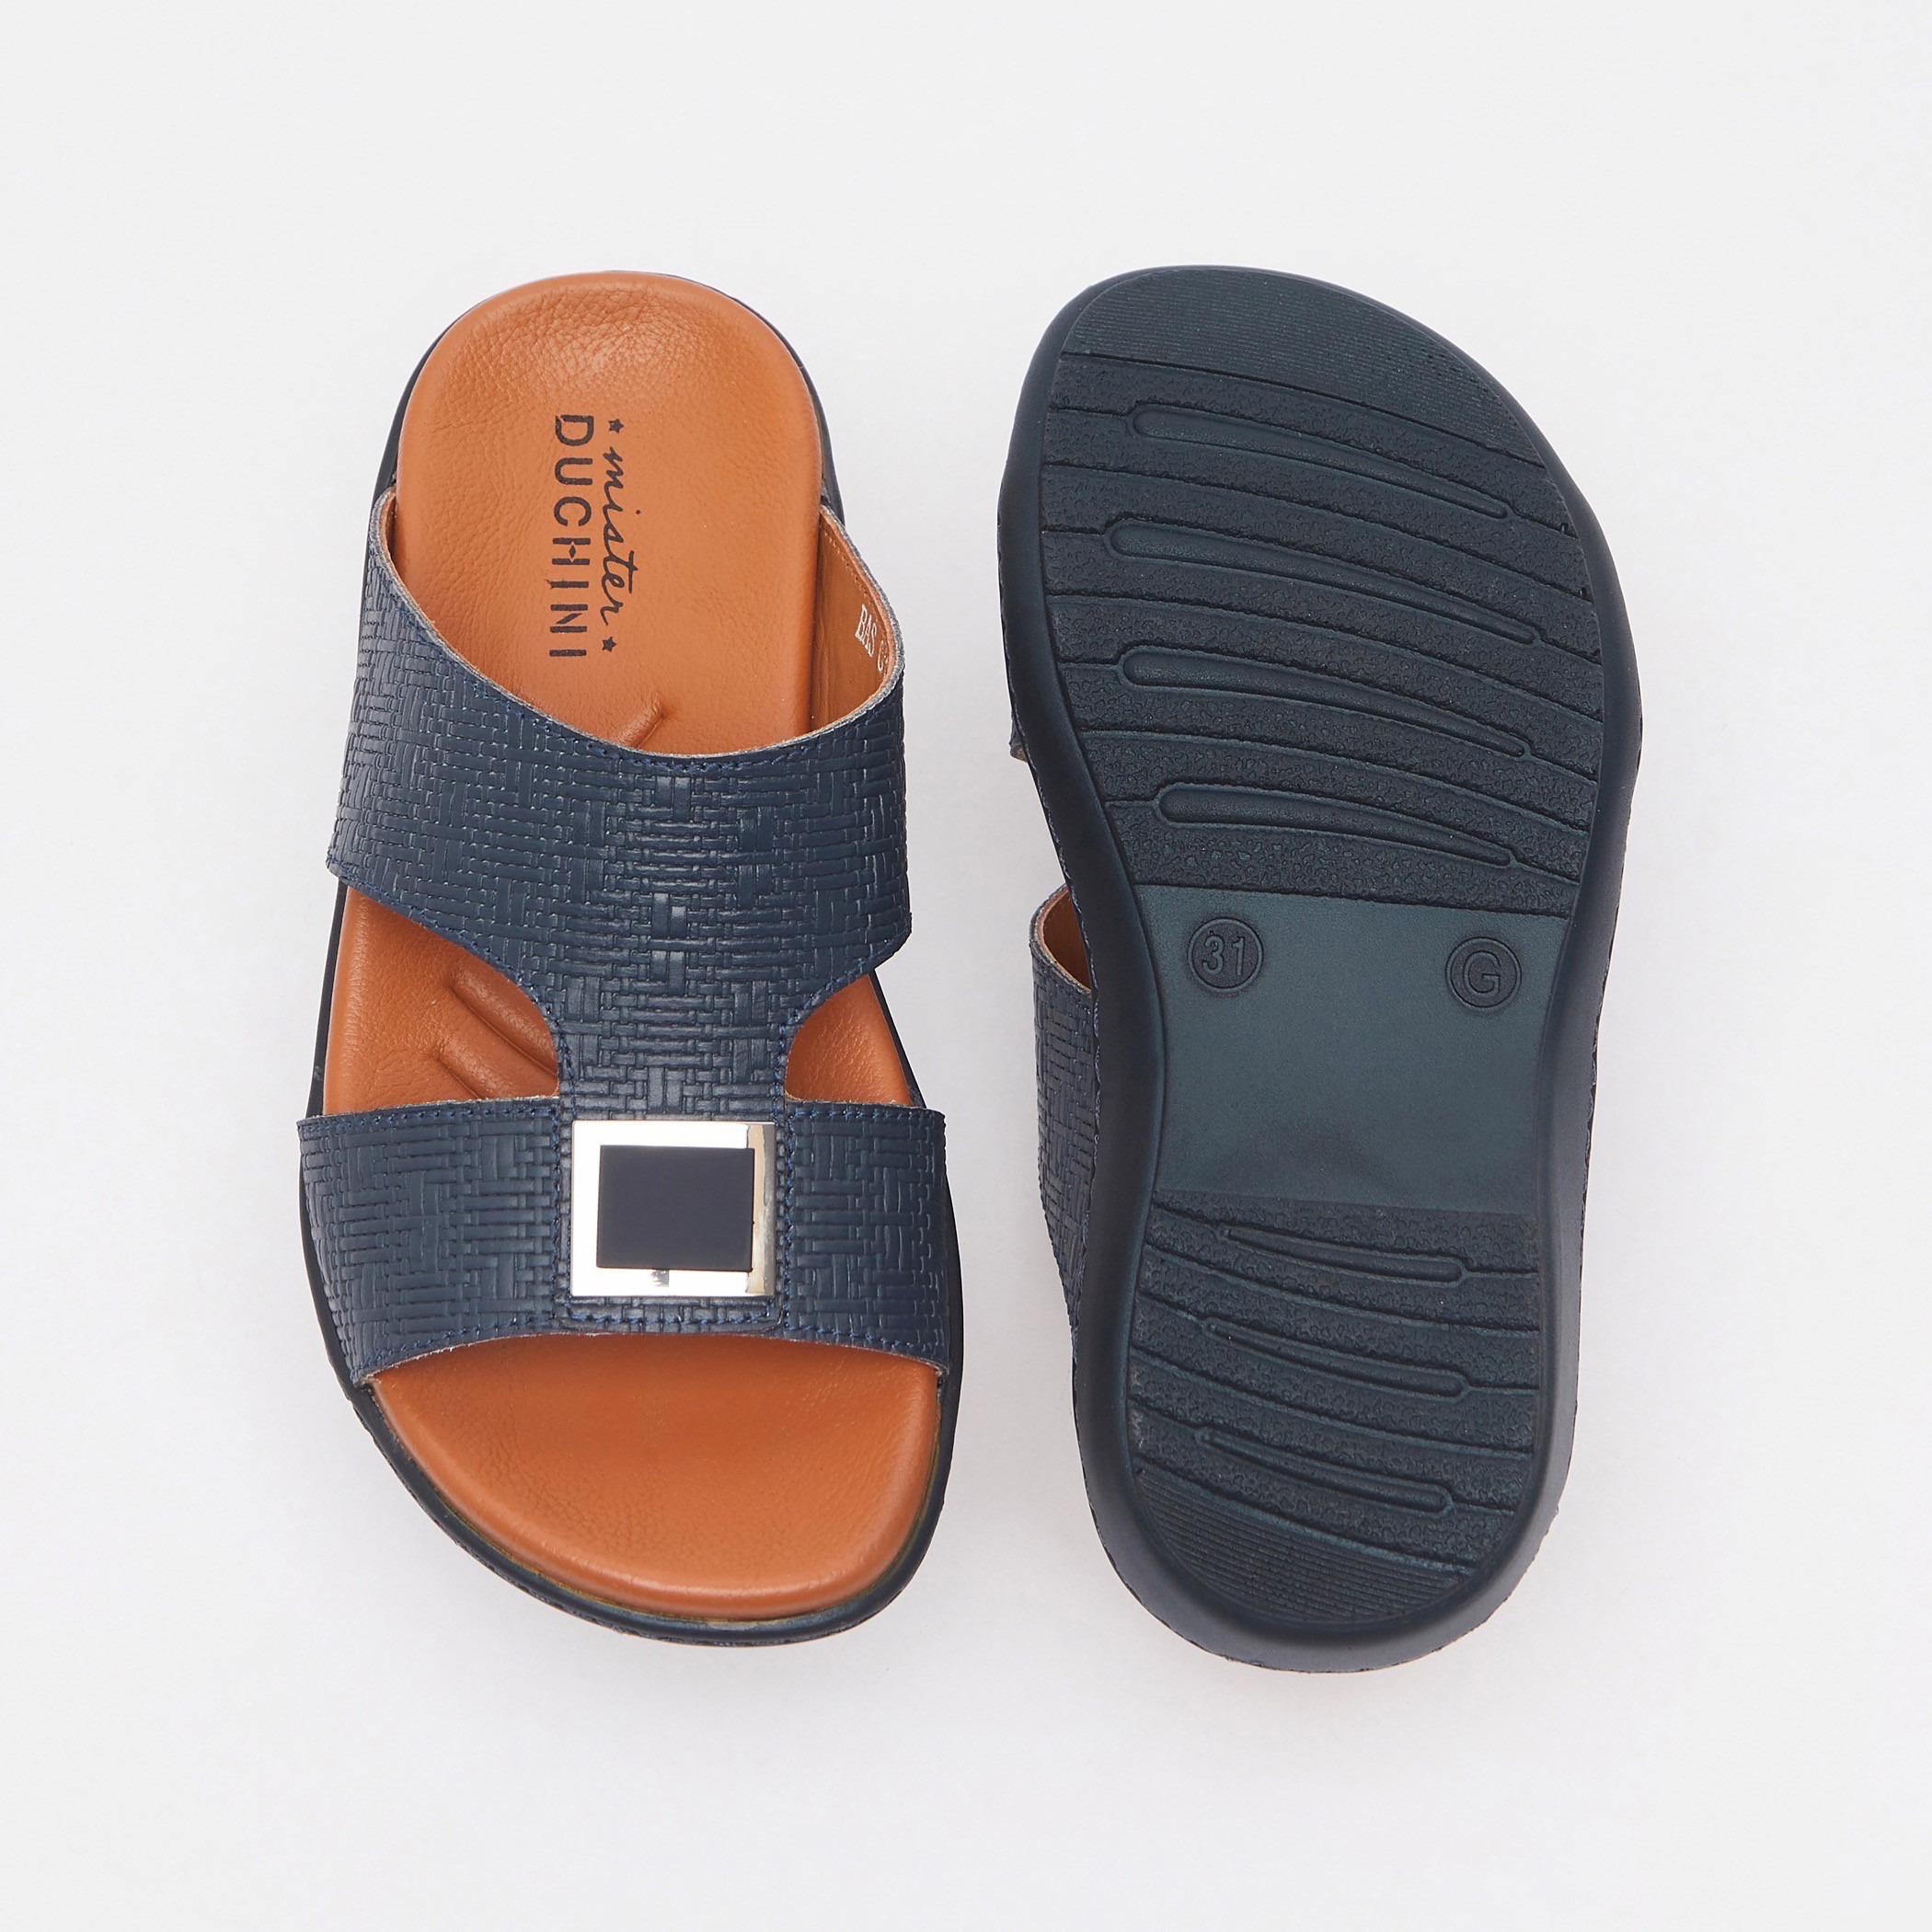 Tamima Handmade Arabic Black Leather Sandals | Black leather sandals,  Leather sandals, Leather